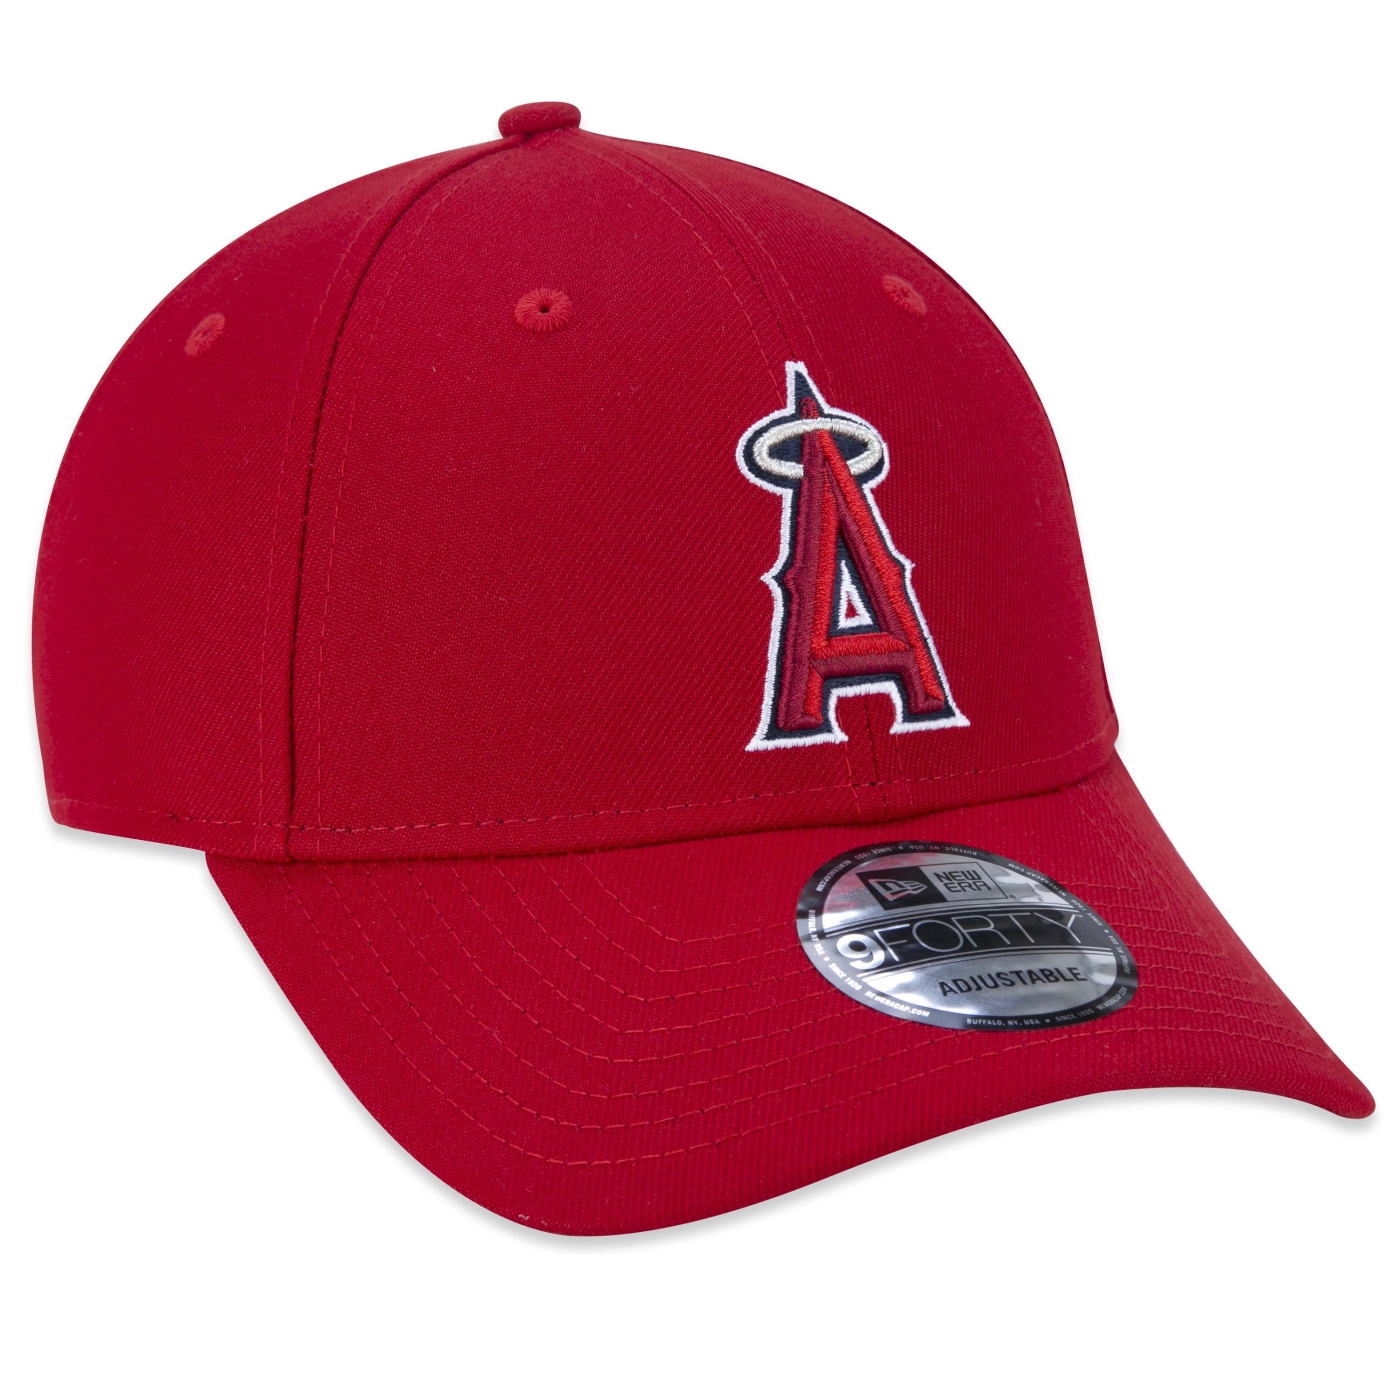 Bone New Era 9FORTY Snapback MLB Los Angeles Angels Aba Curva Vermelho Vermelho 3